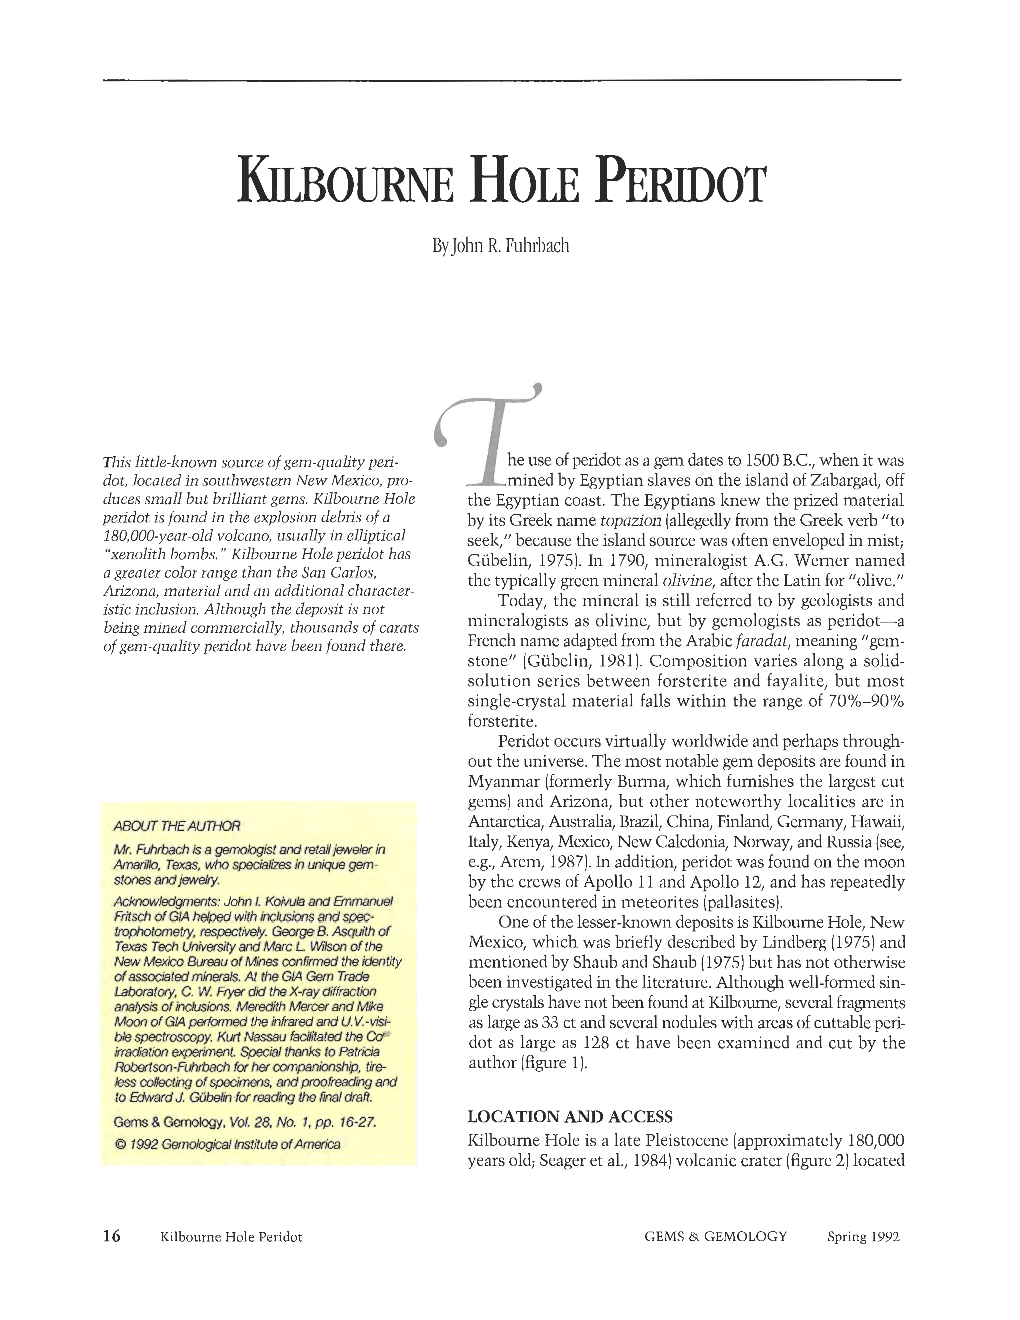 Kilbourne Hole Peridot